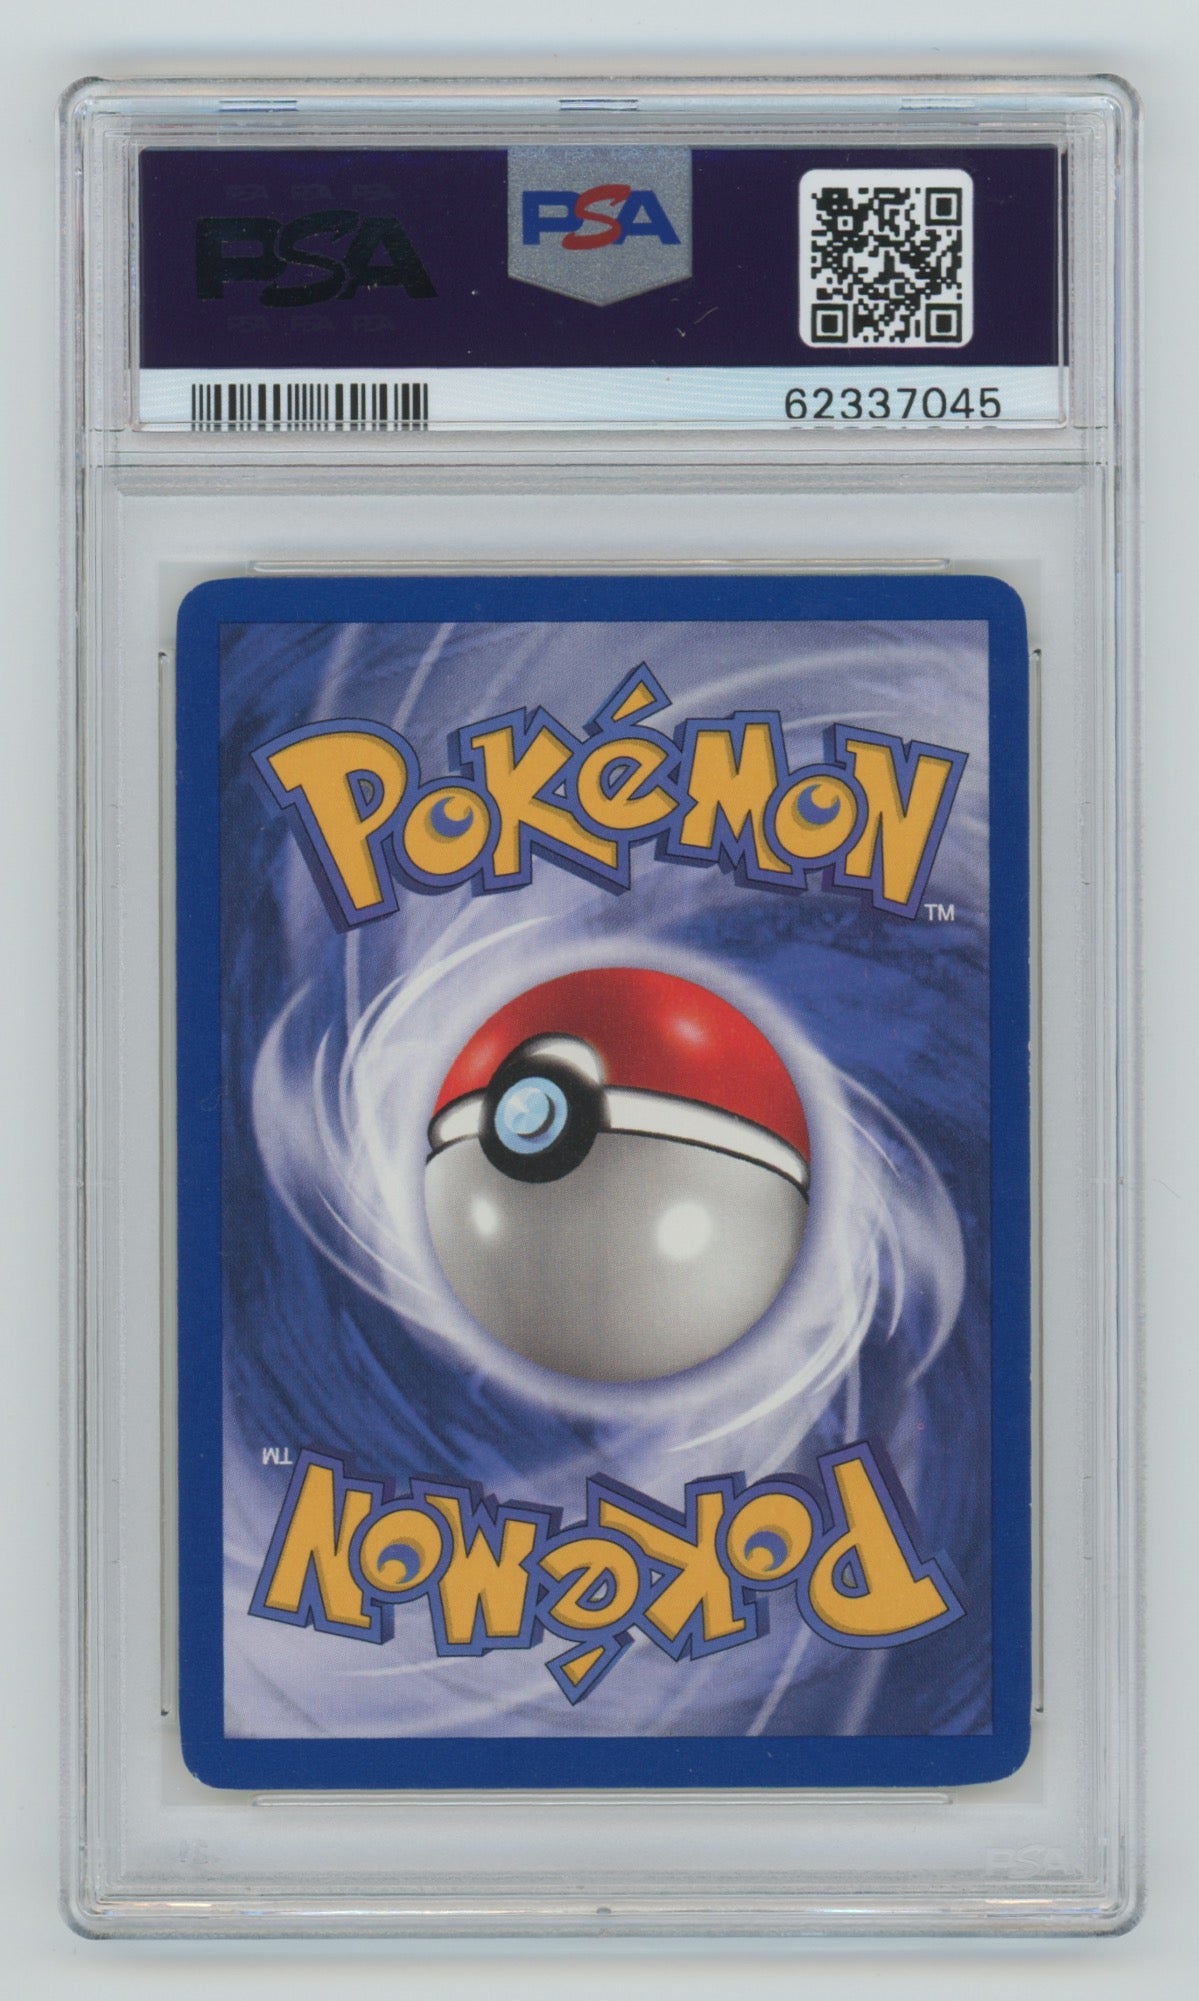 2000 Pokemon Rocket 1st Edition #51 Dark Raticate PSA 9 | Eastridge Sports Cards & Games